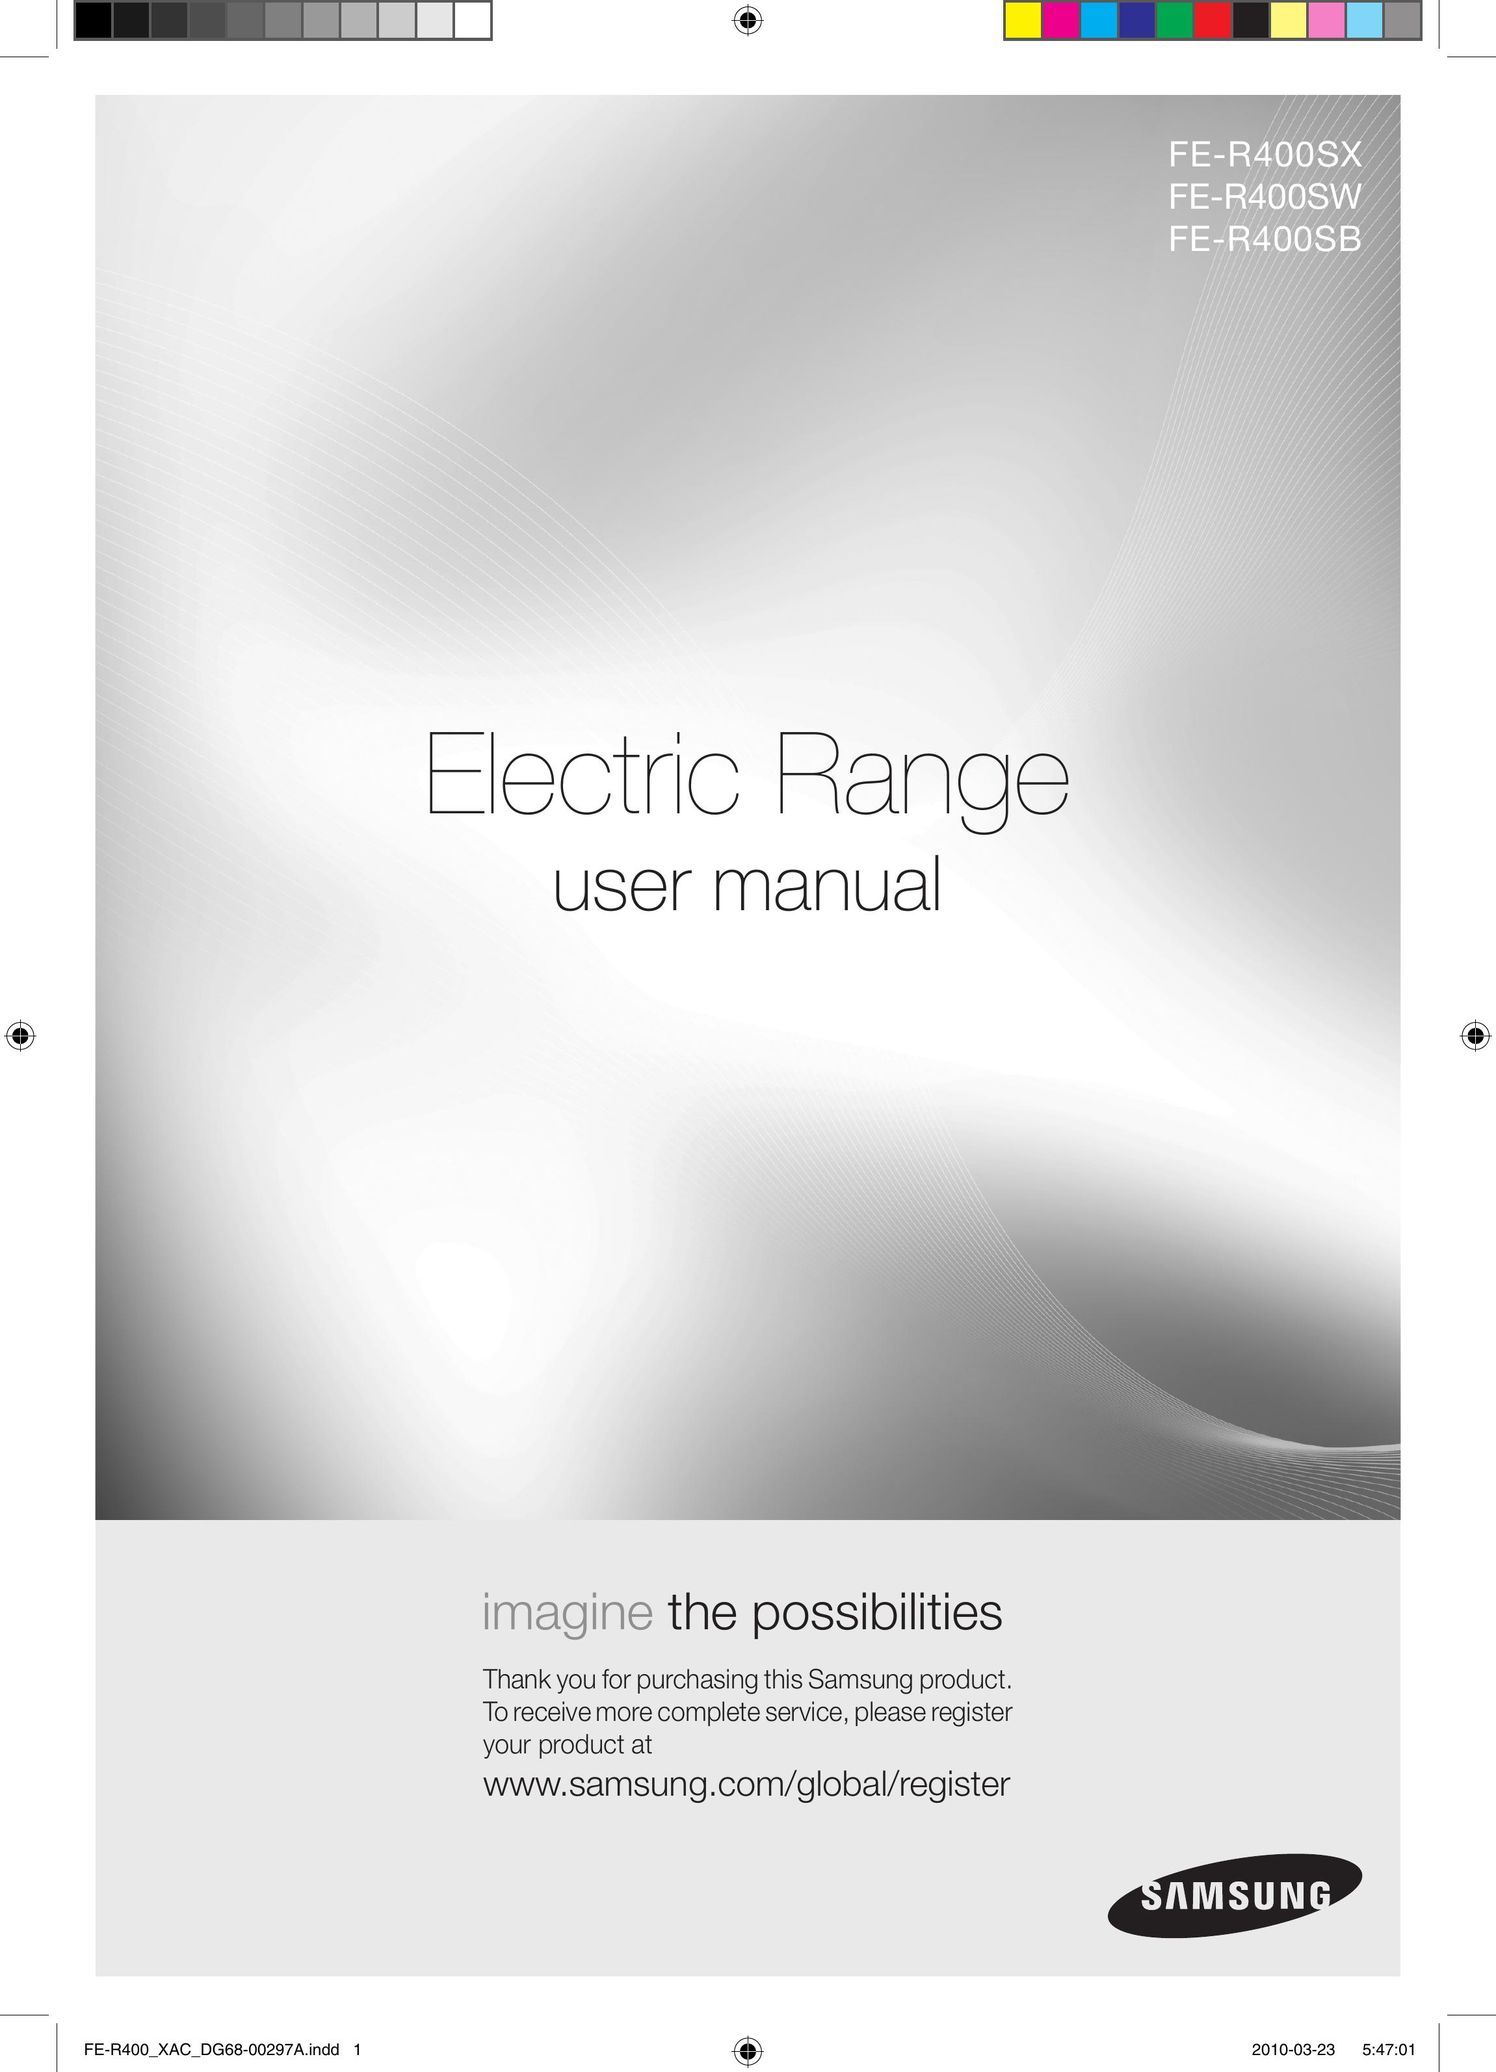 Samsung FE-R400SB Range User Manual